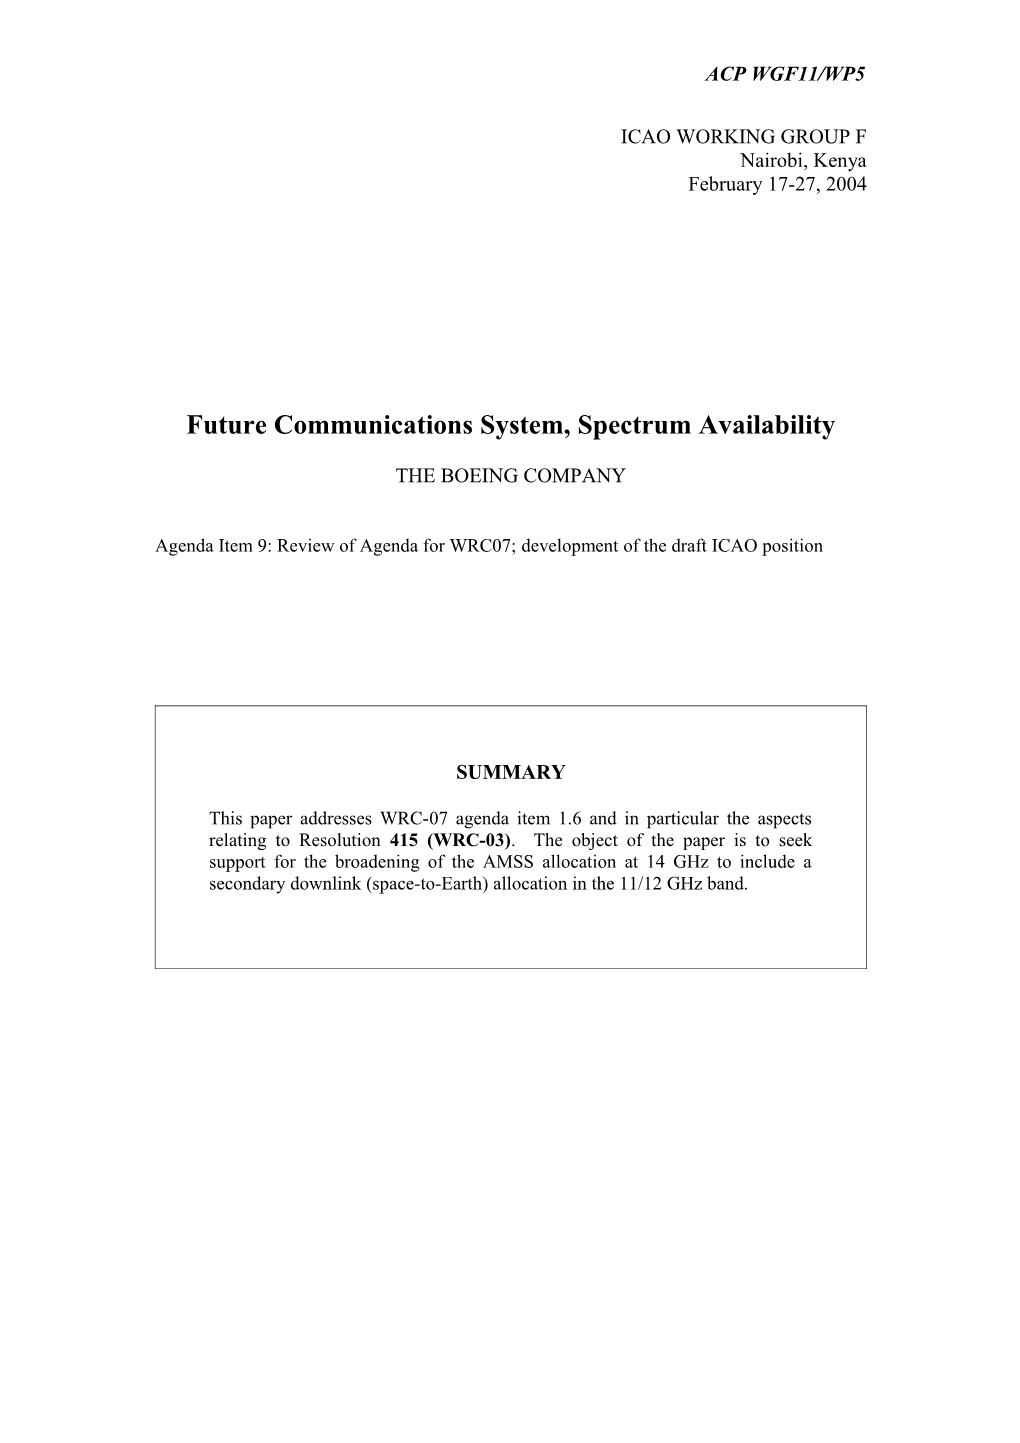 Future Communications System, Spectrum Availability